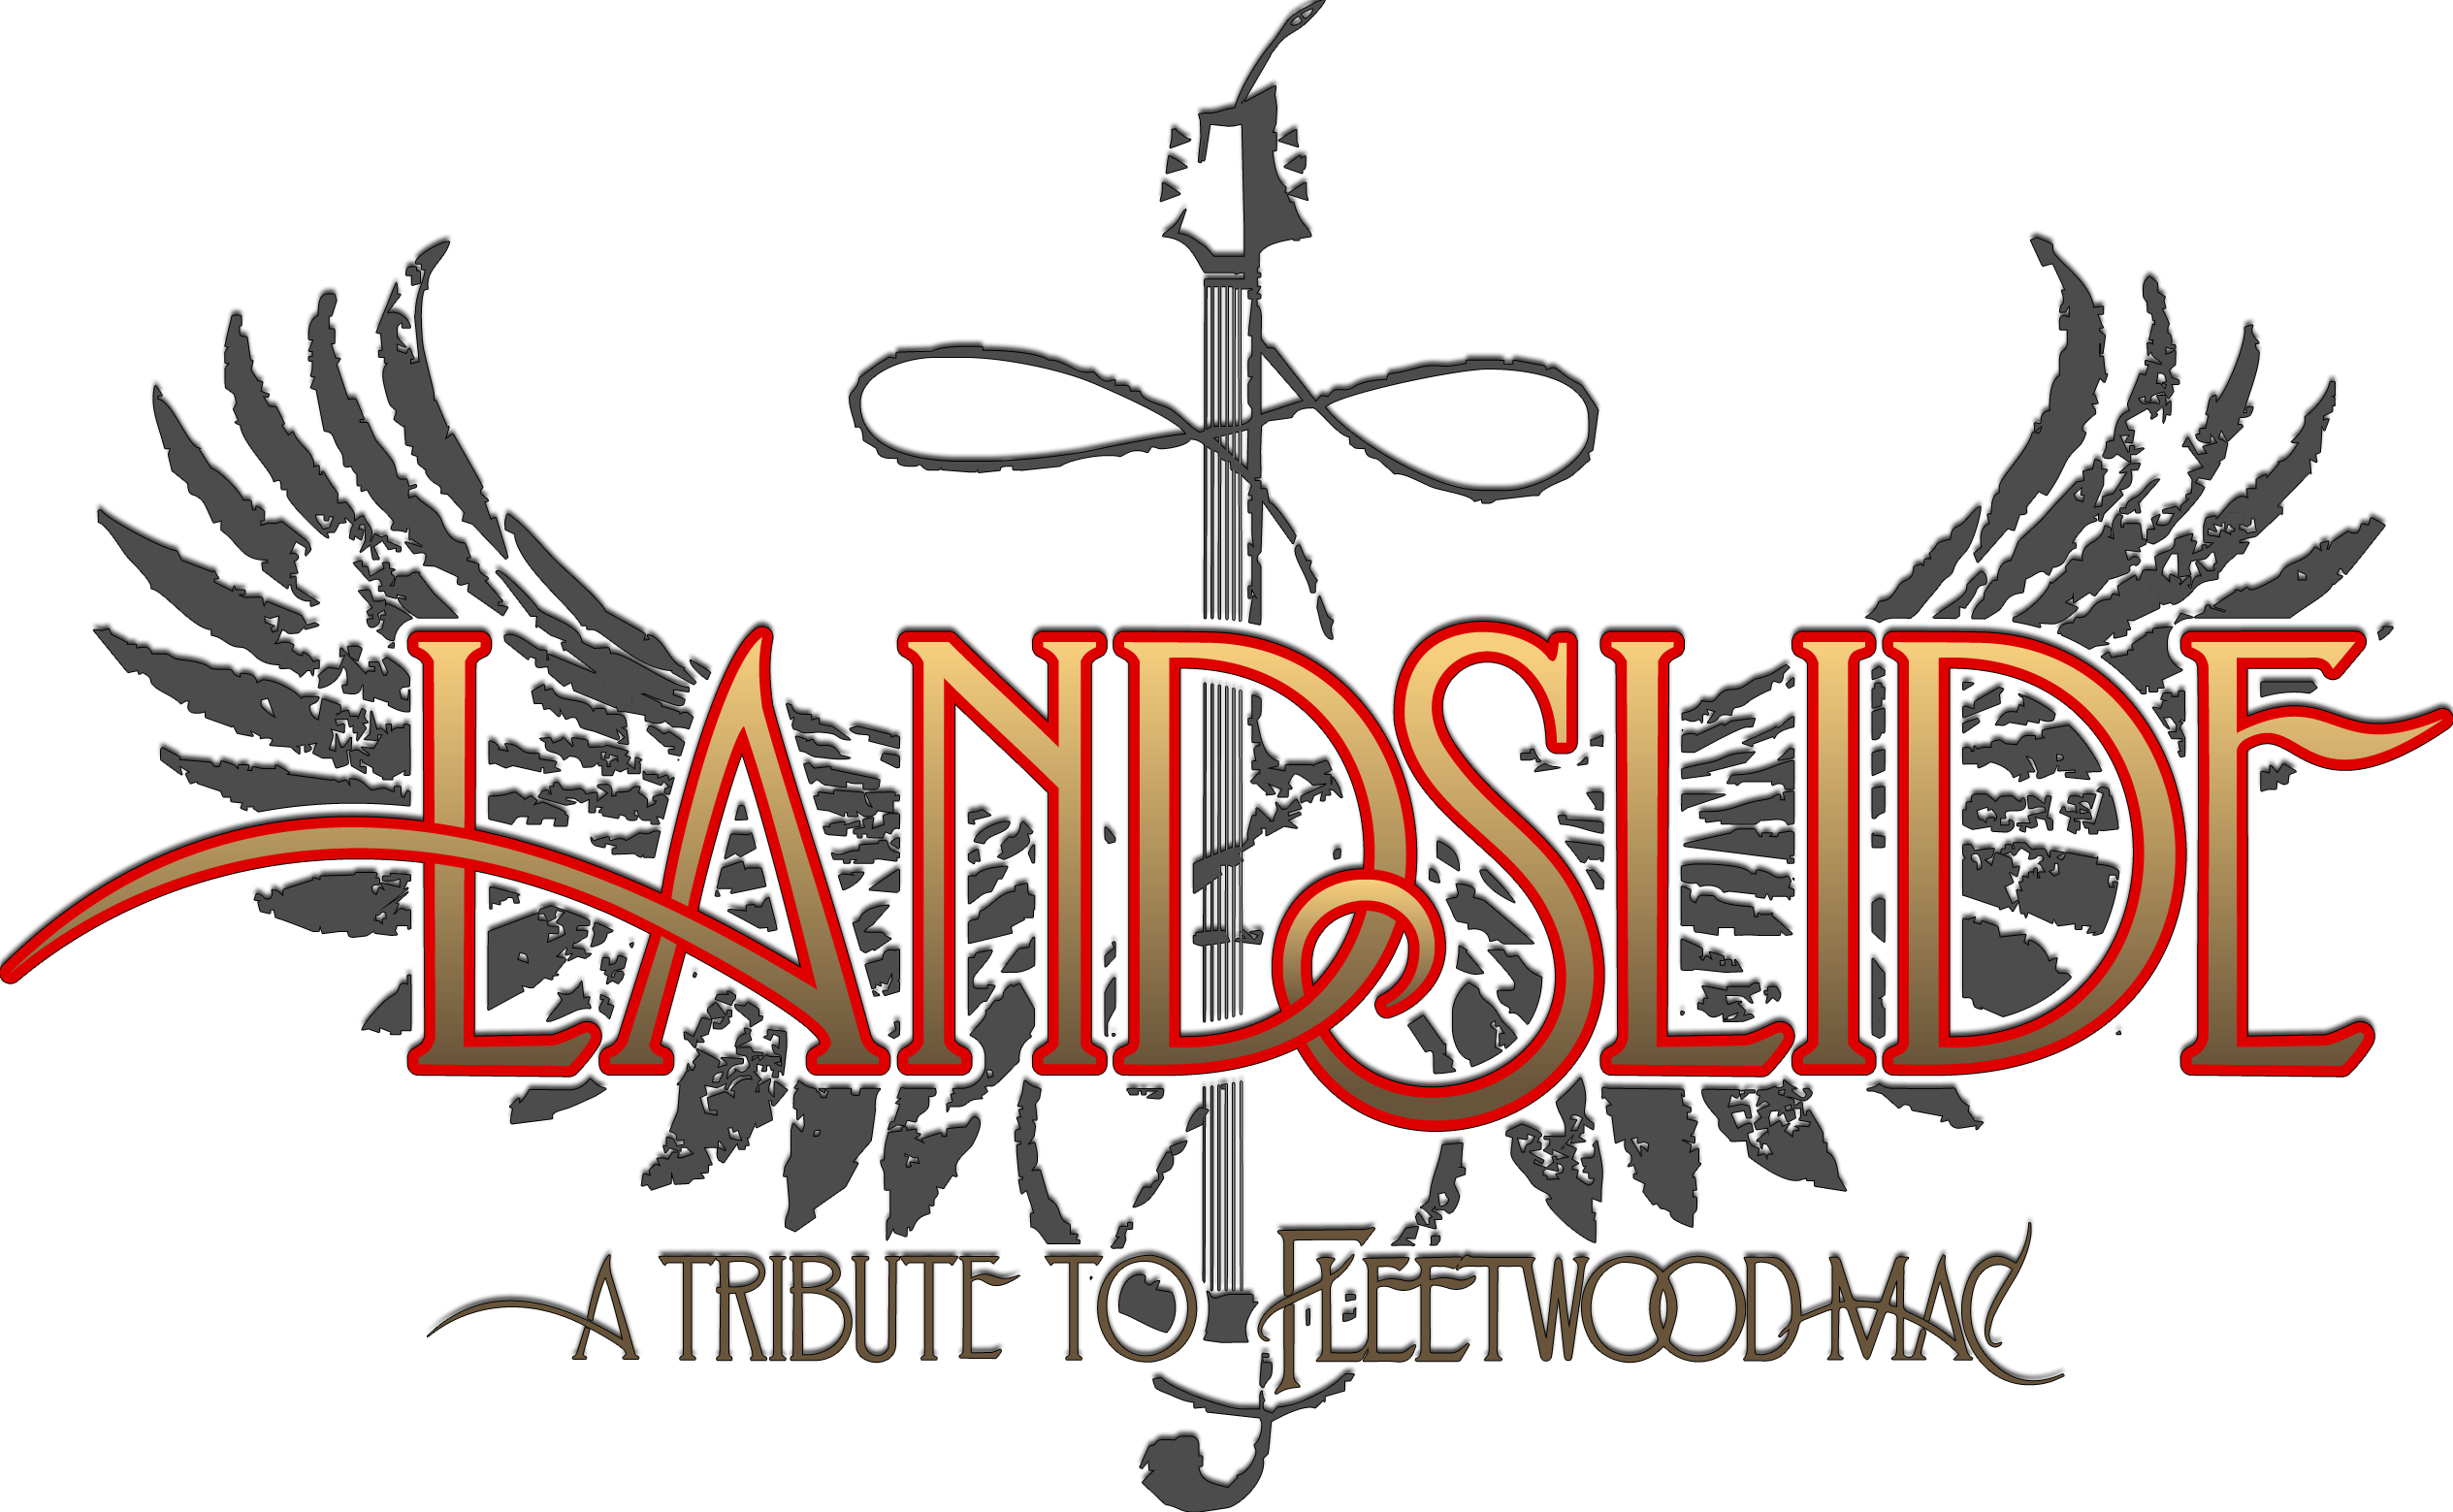 Landslide - A tribute to Fleetwood Mac